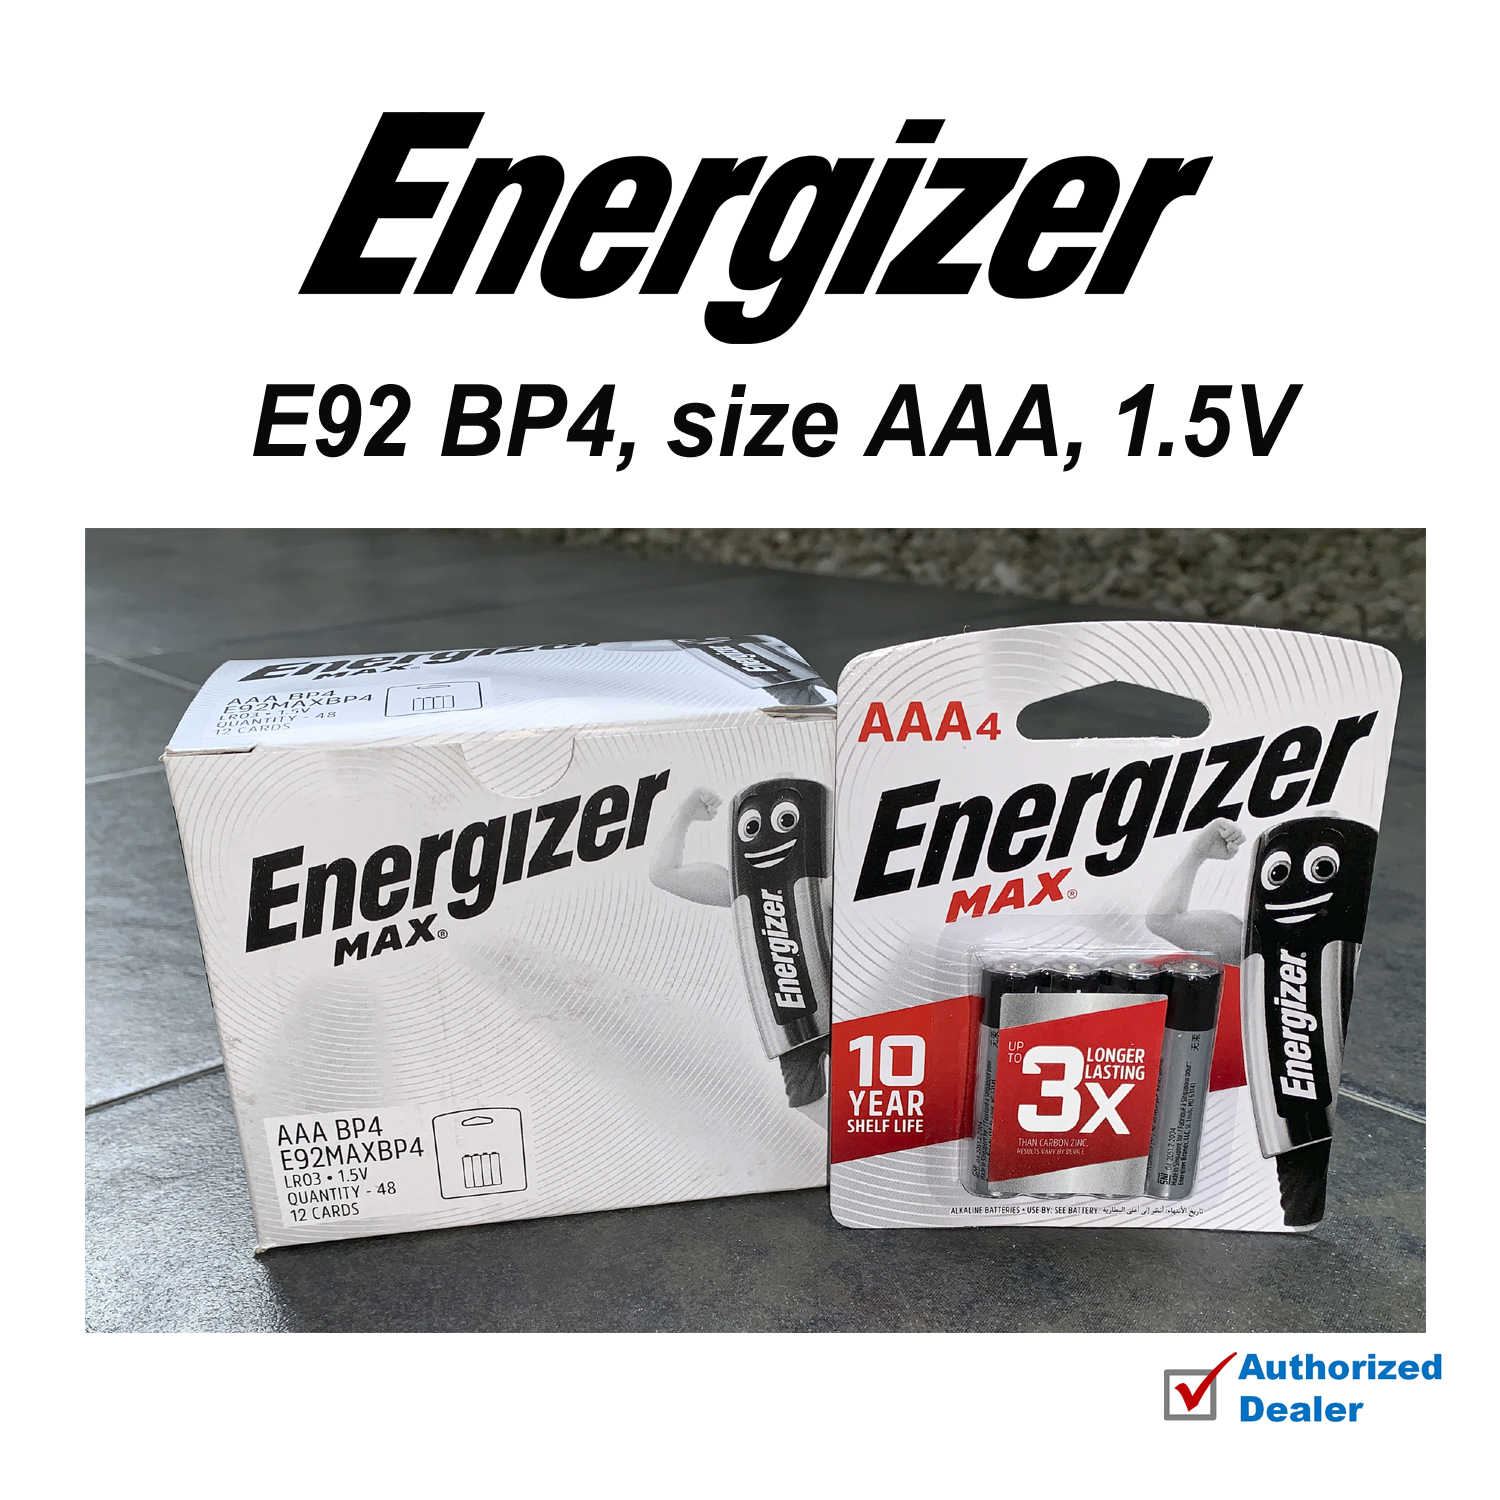 Energizer MAX Alkaline AAA Batteries 1.5V